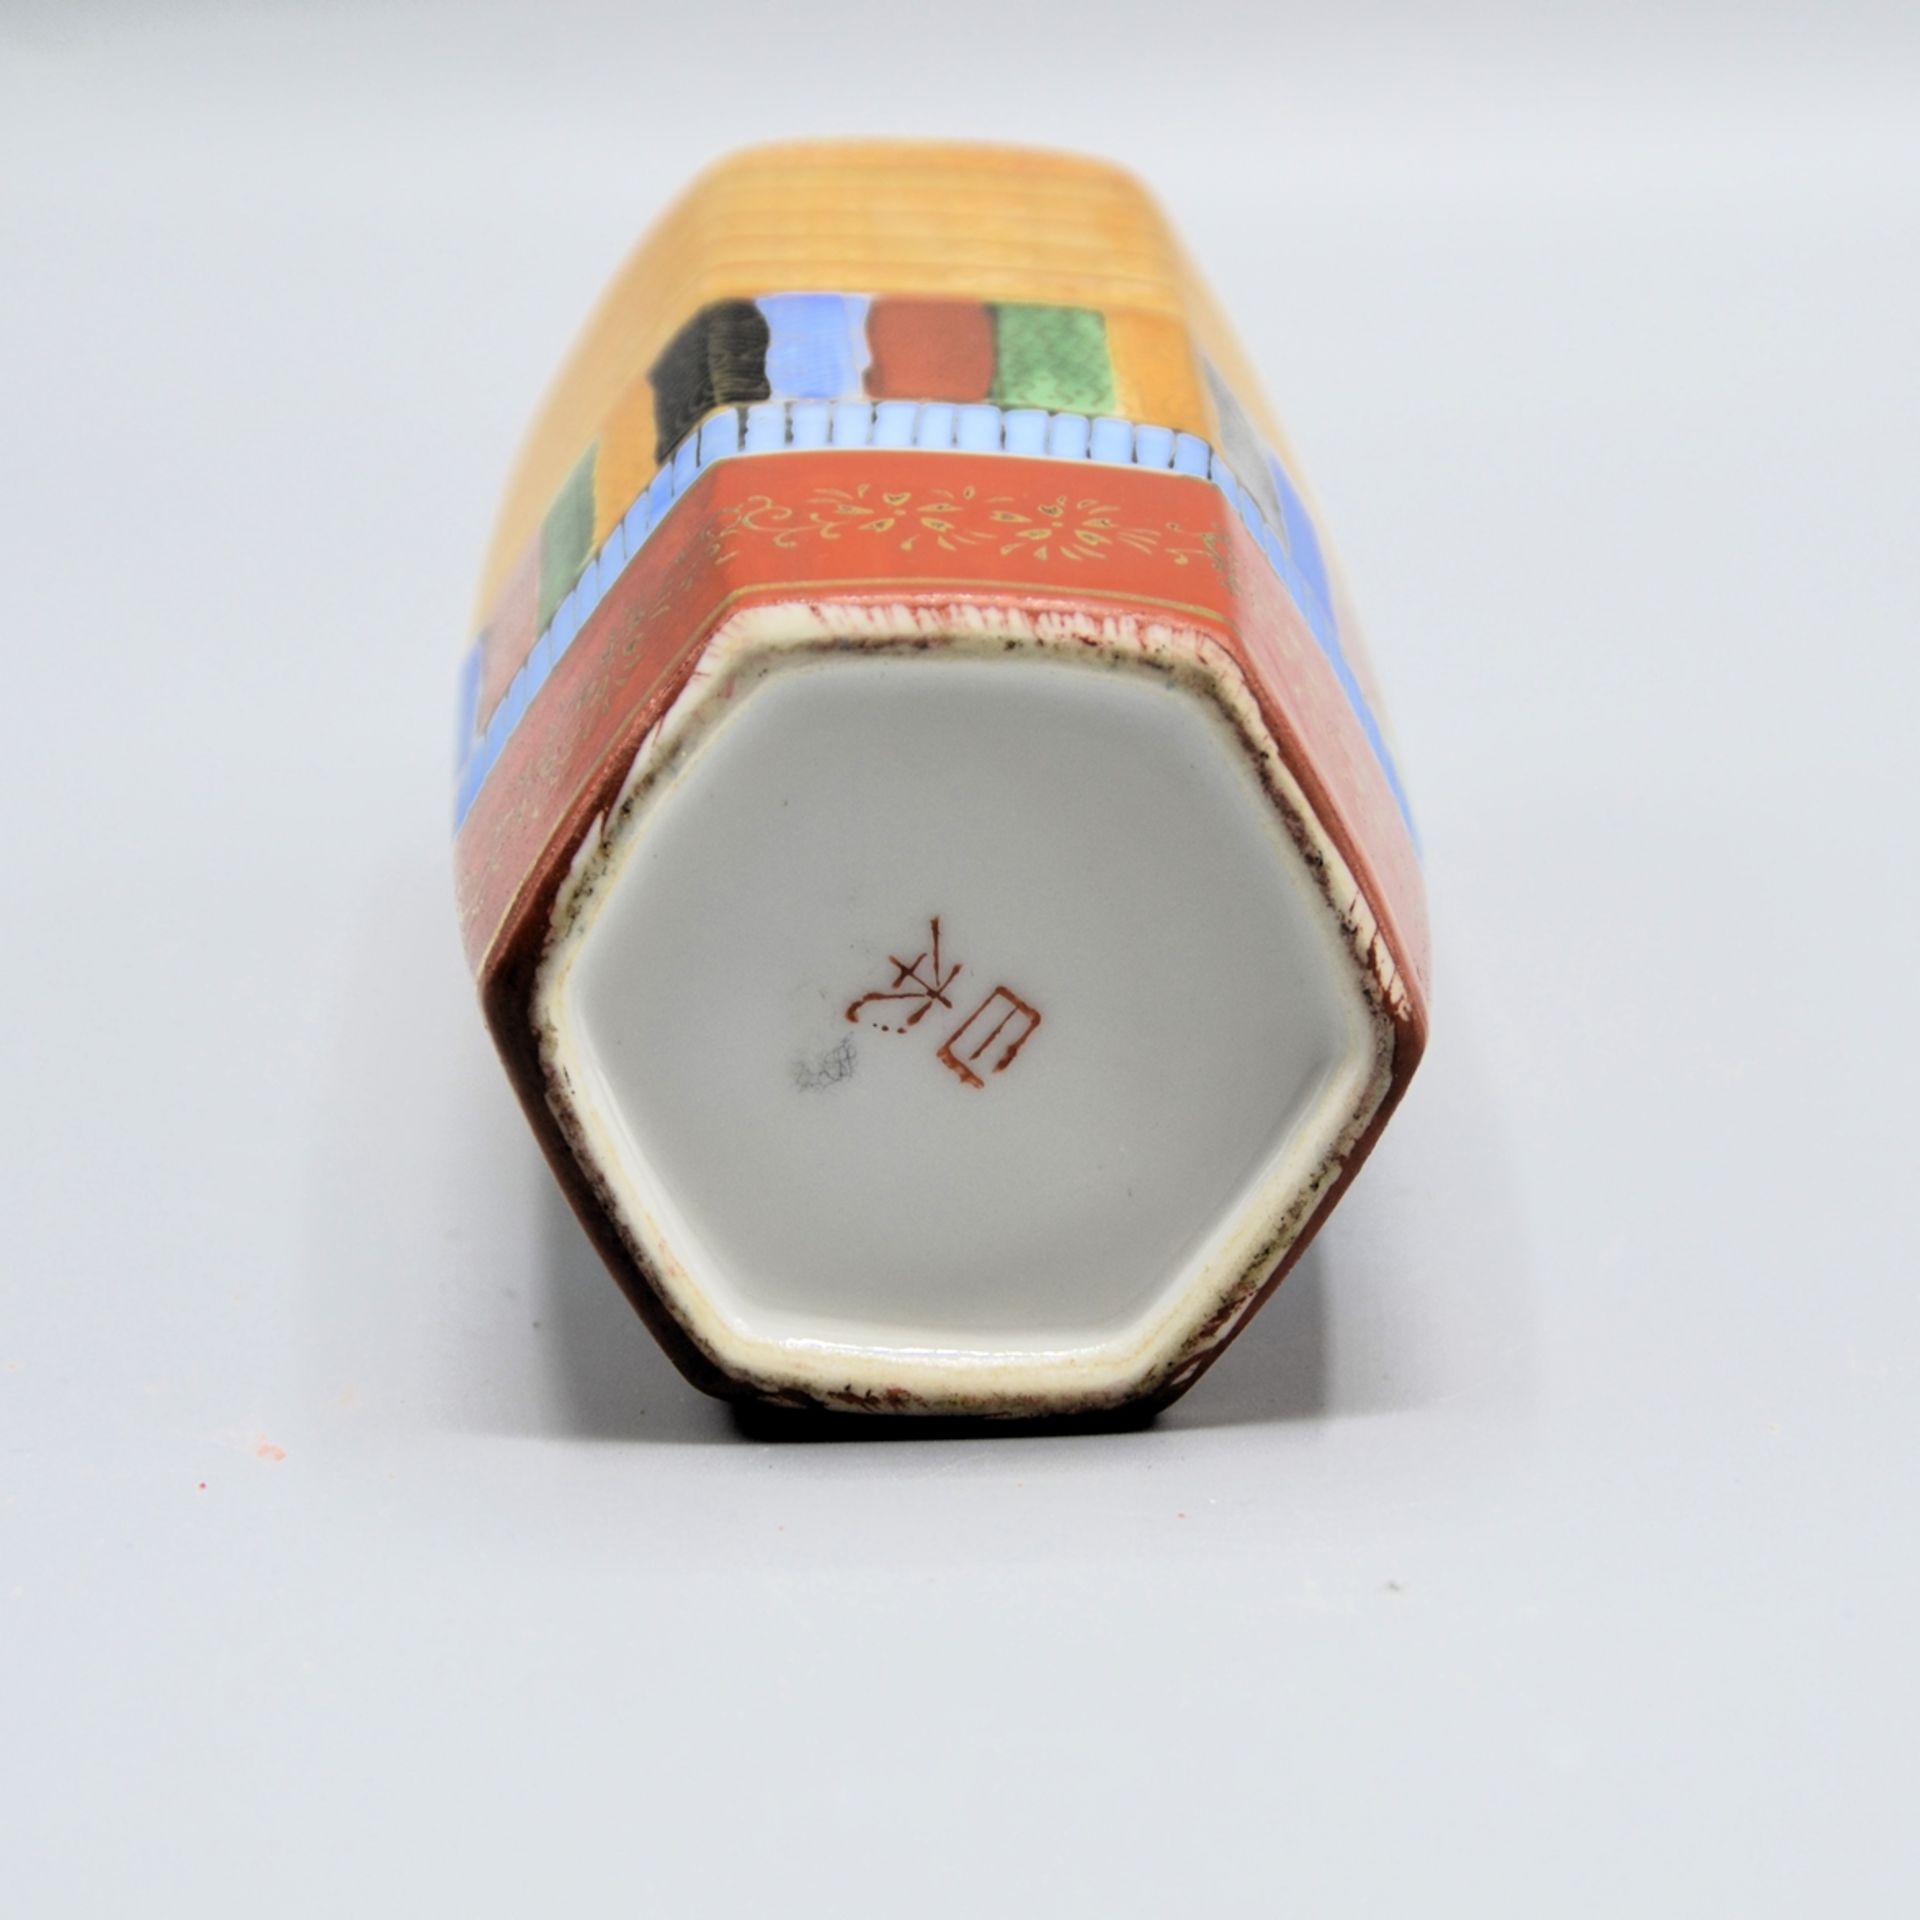 Sake Flasche Japan handbemalt Mitte 20 Jh., ca. 17 cm - Image 3 of 3